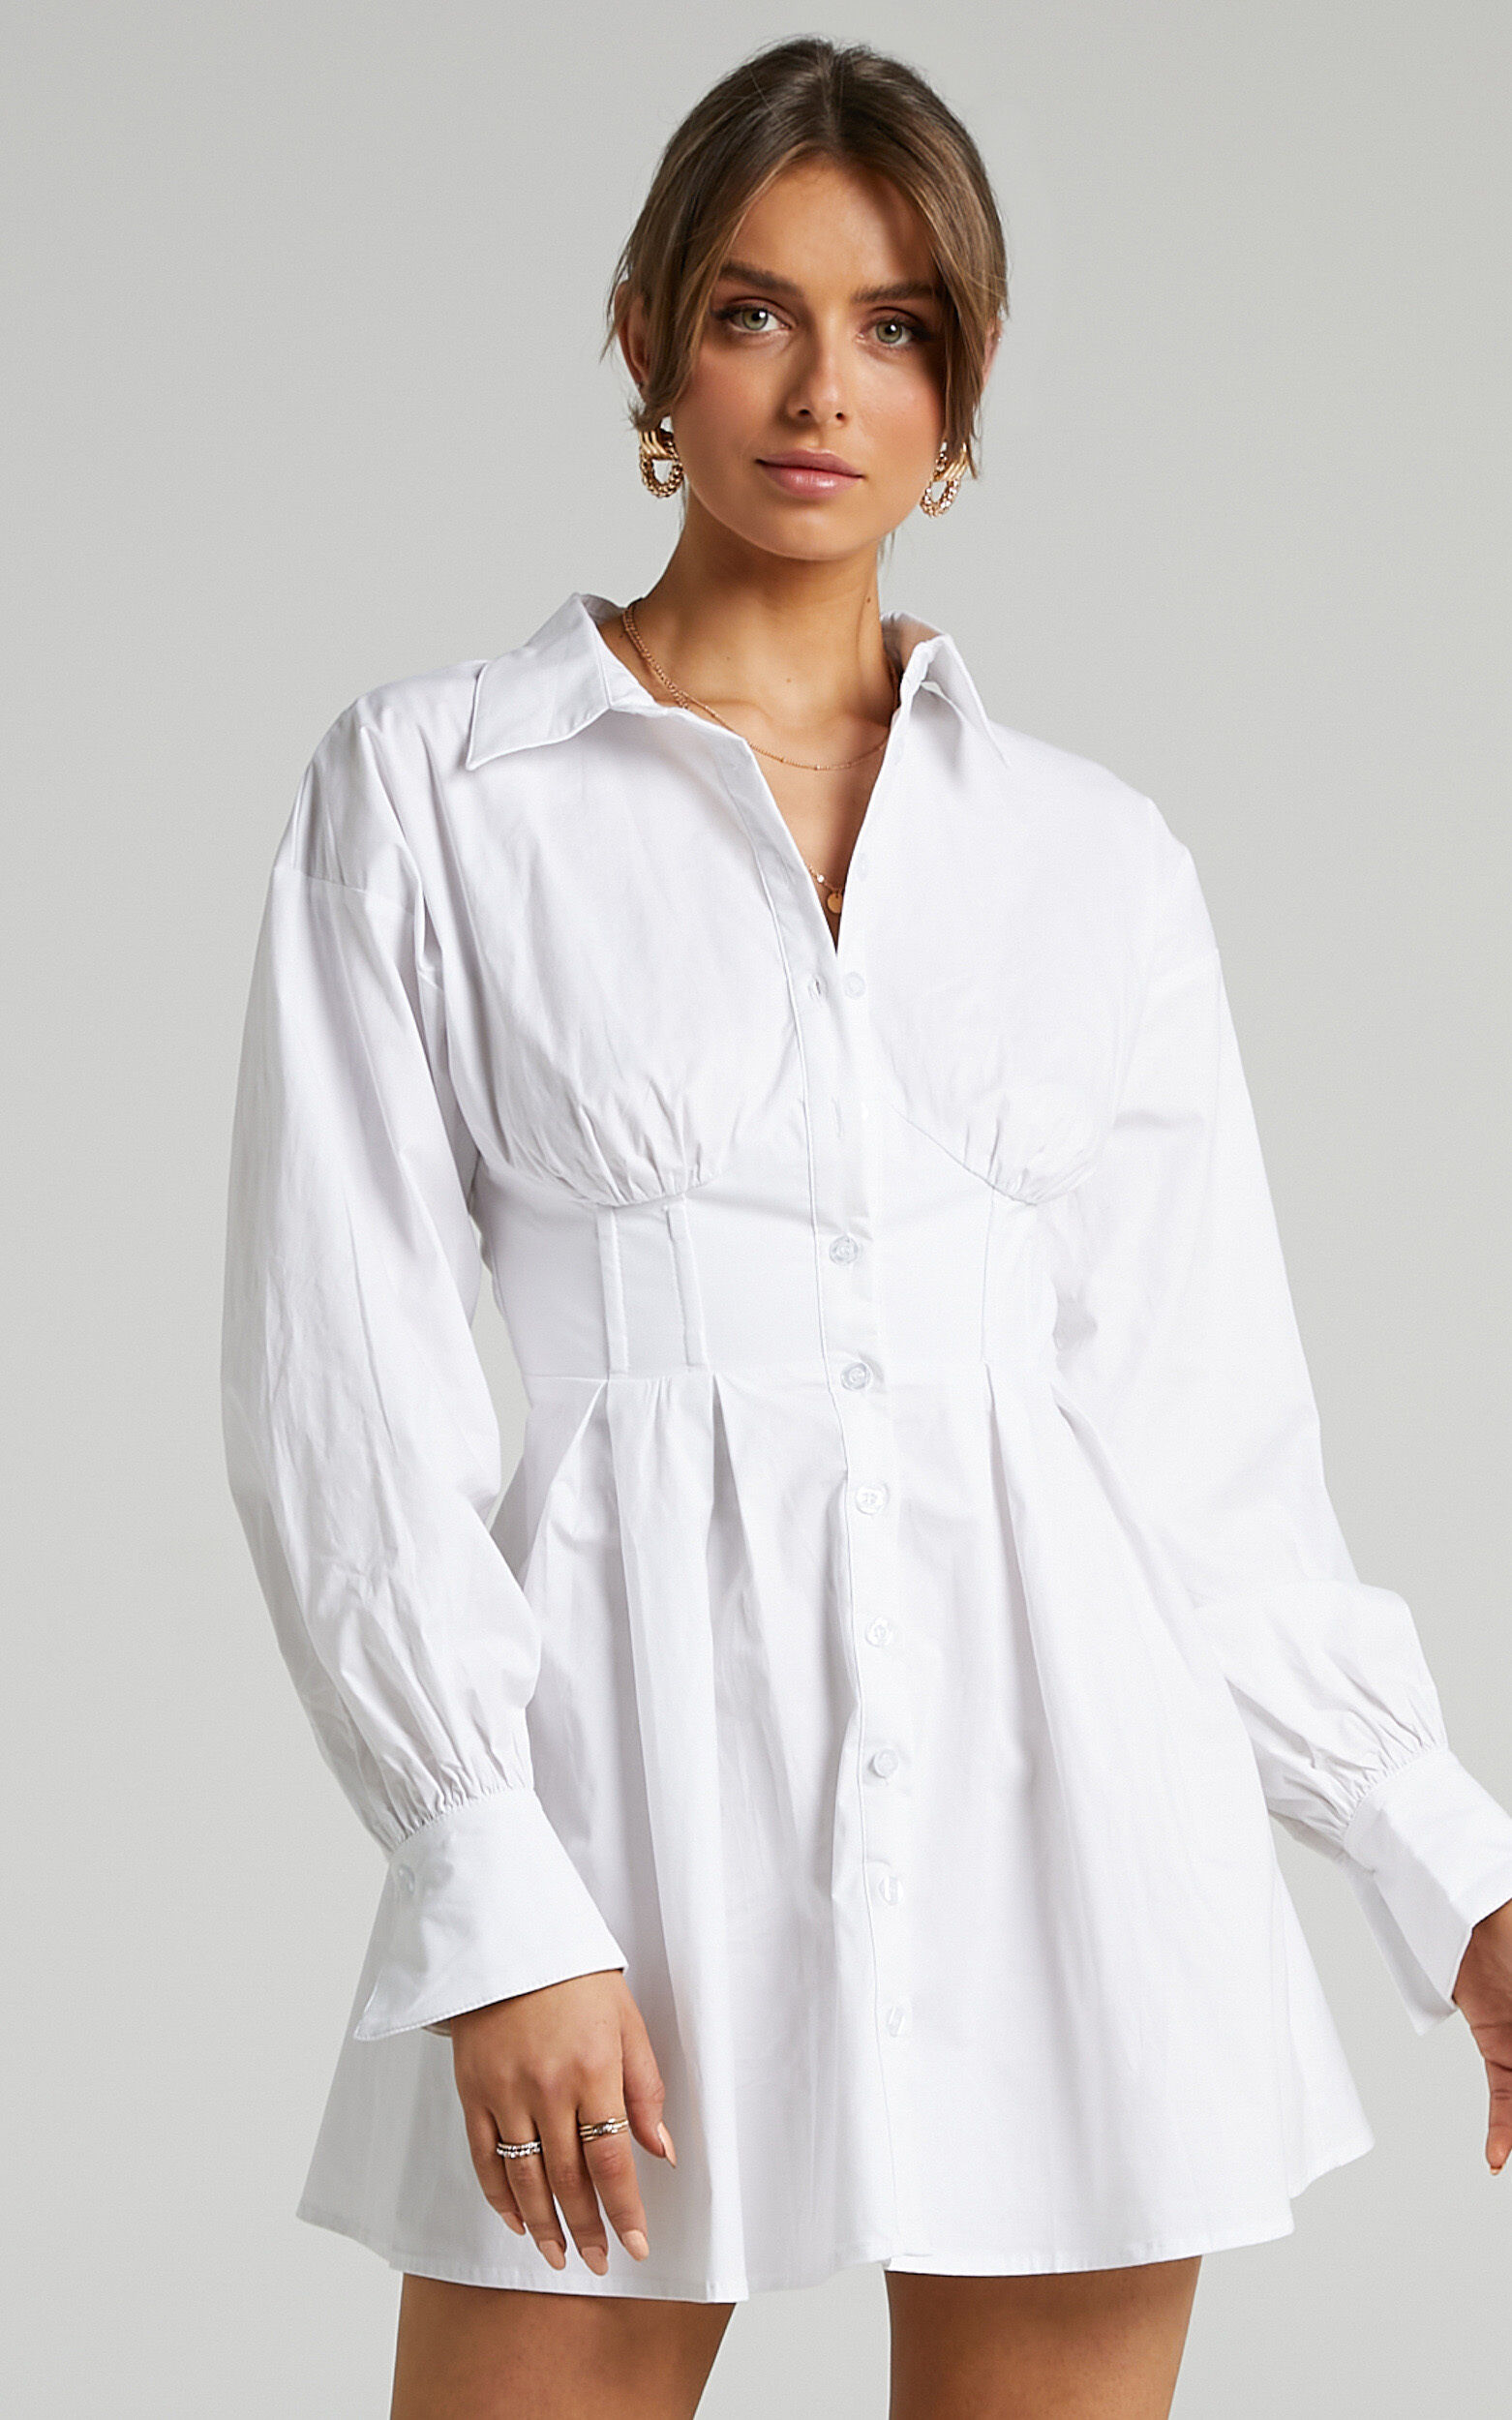 Claudette Mini Dress - Long Sleeve Corset Shirt Dress in White - 06, WHT2, super-hi-res image number null